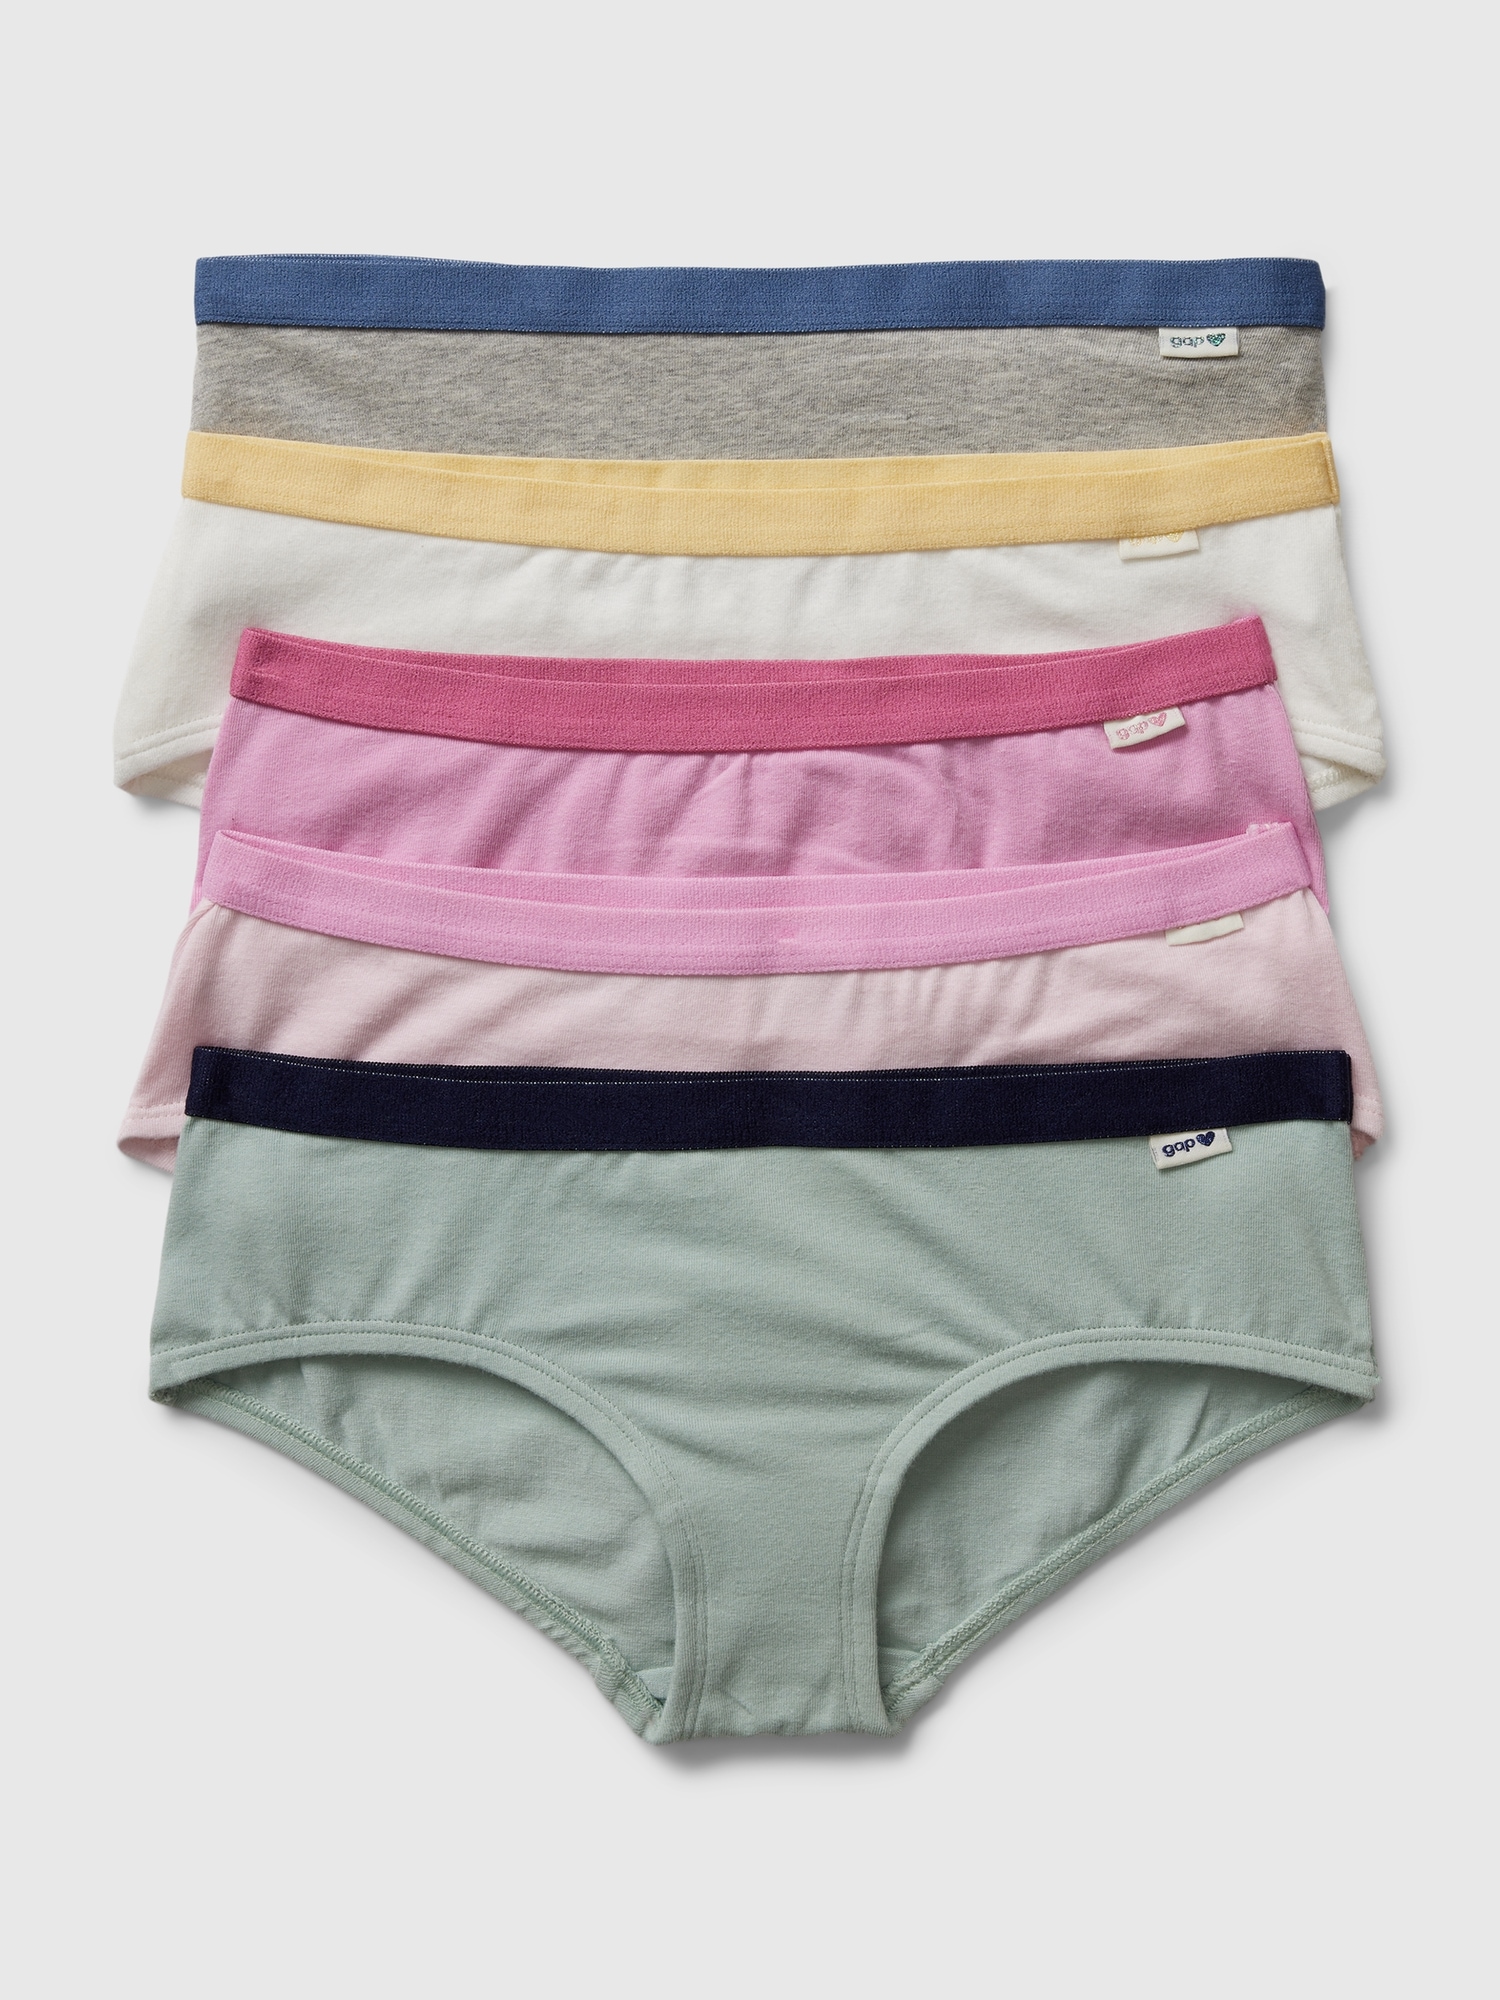 GAP Kids Underpants, 5 pcs - Girls